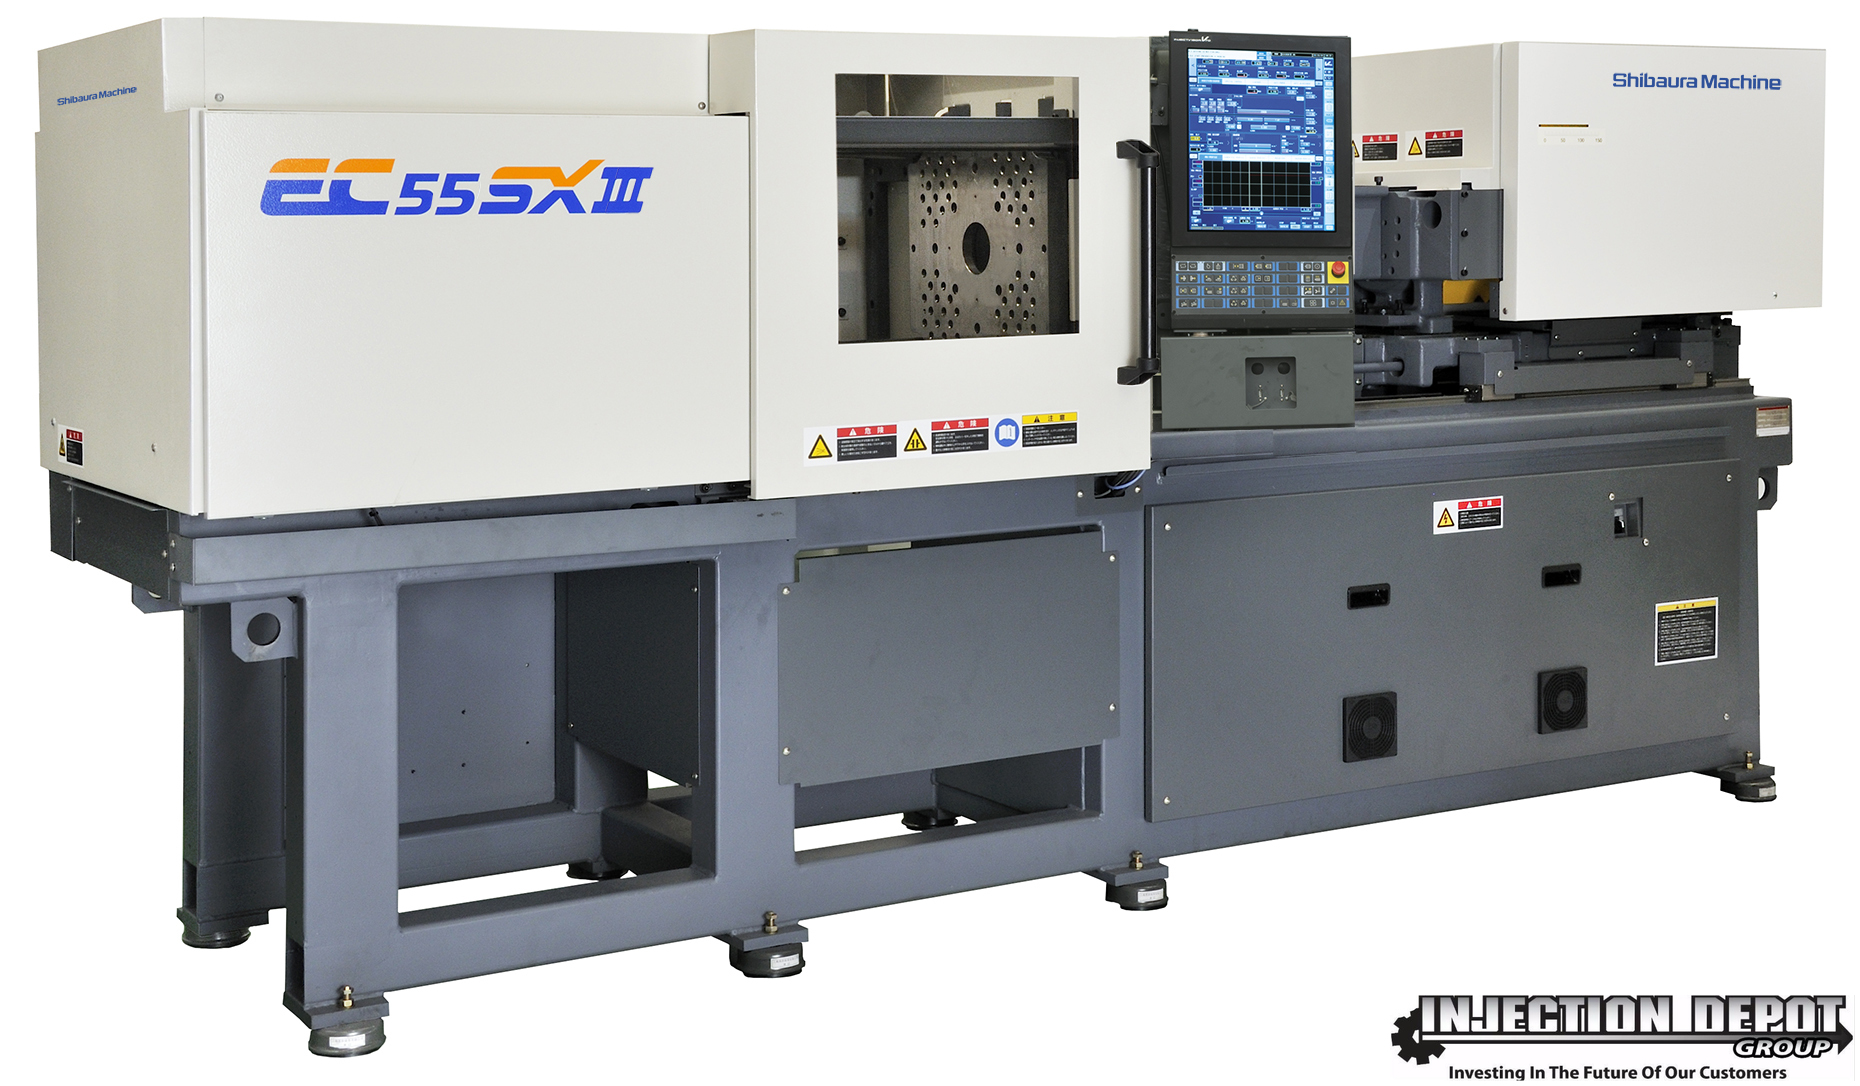 SHIBAURA MACHINE EC55SXIIIV70-U1.5 1.5Y Horizontal Injection Moulding Machines | INJECTION DEPOT GROUP